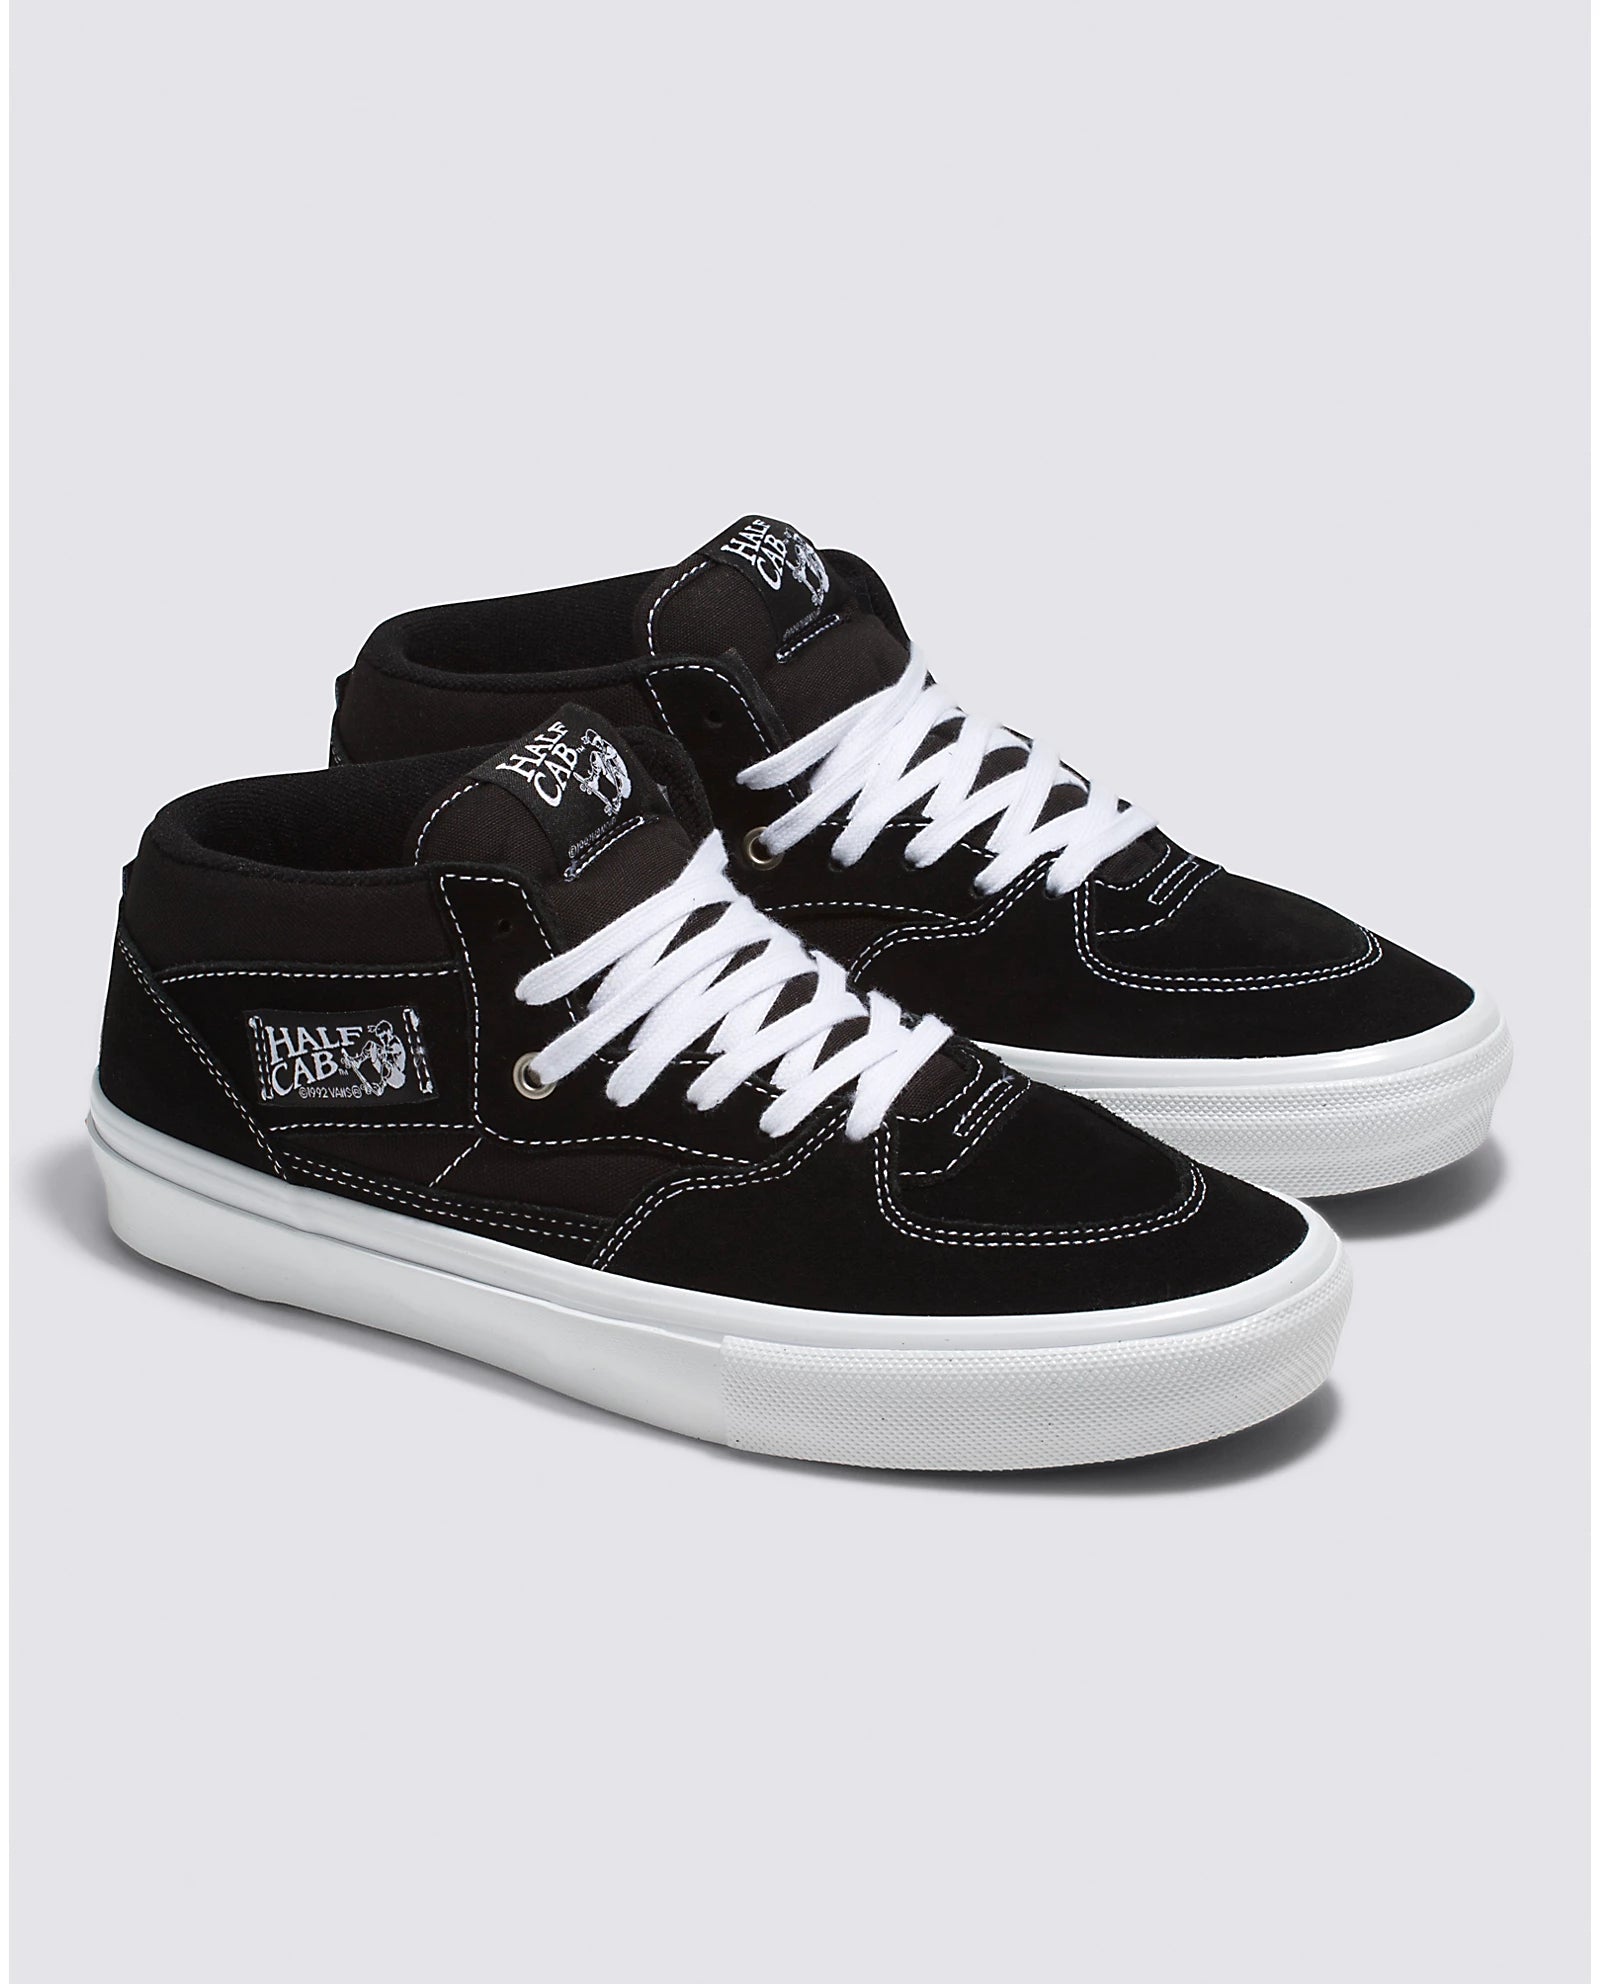 Vans Skate Half Cab Shoe Black/White